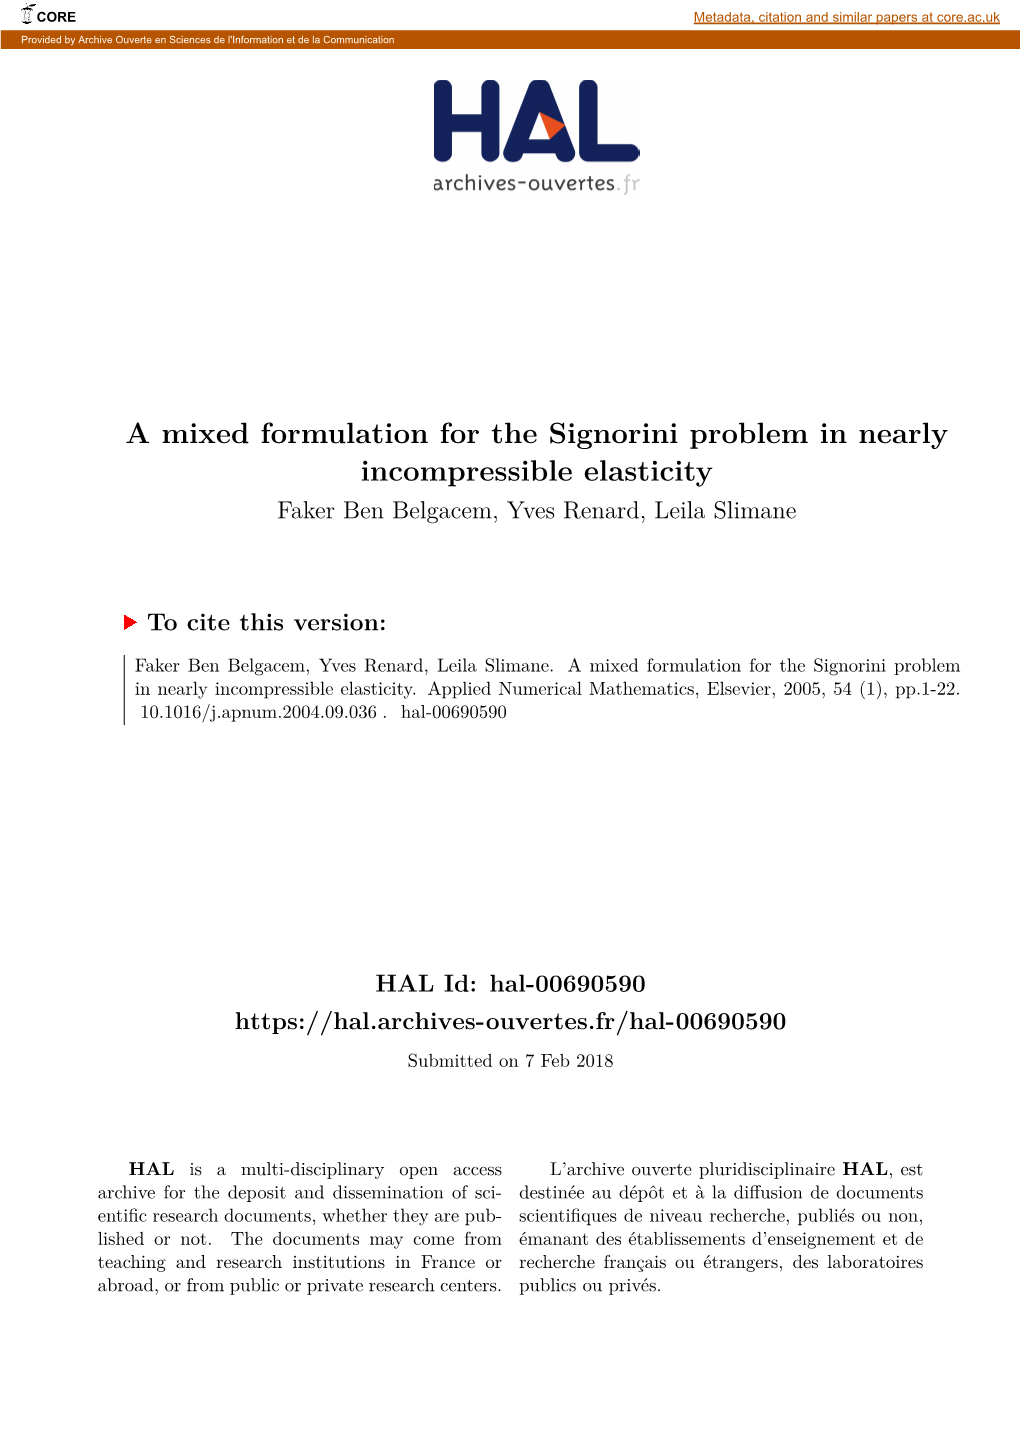 A Mixed Formulation for the Signorini Problem in Nearly Incompressible Elasticity Faker Ben Belgacem, Yves Renard, Leila Slimane